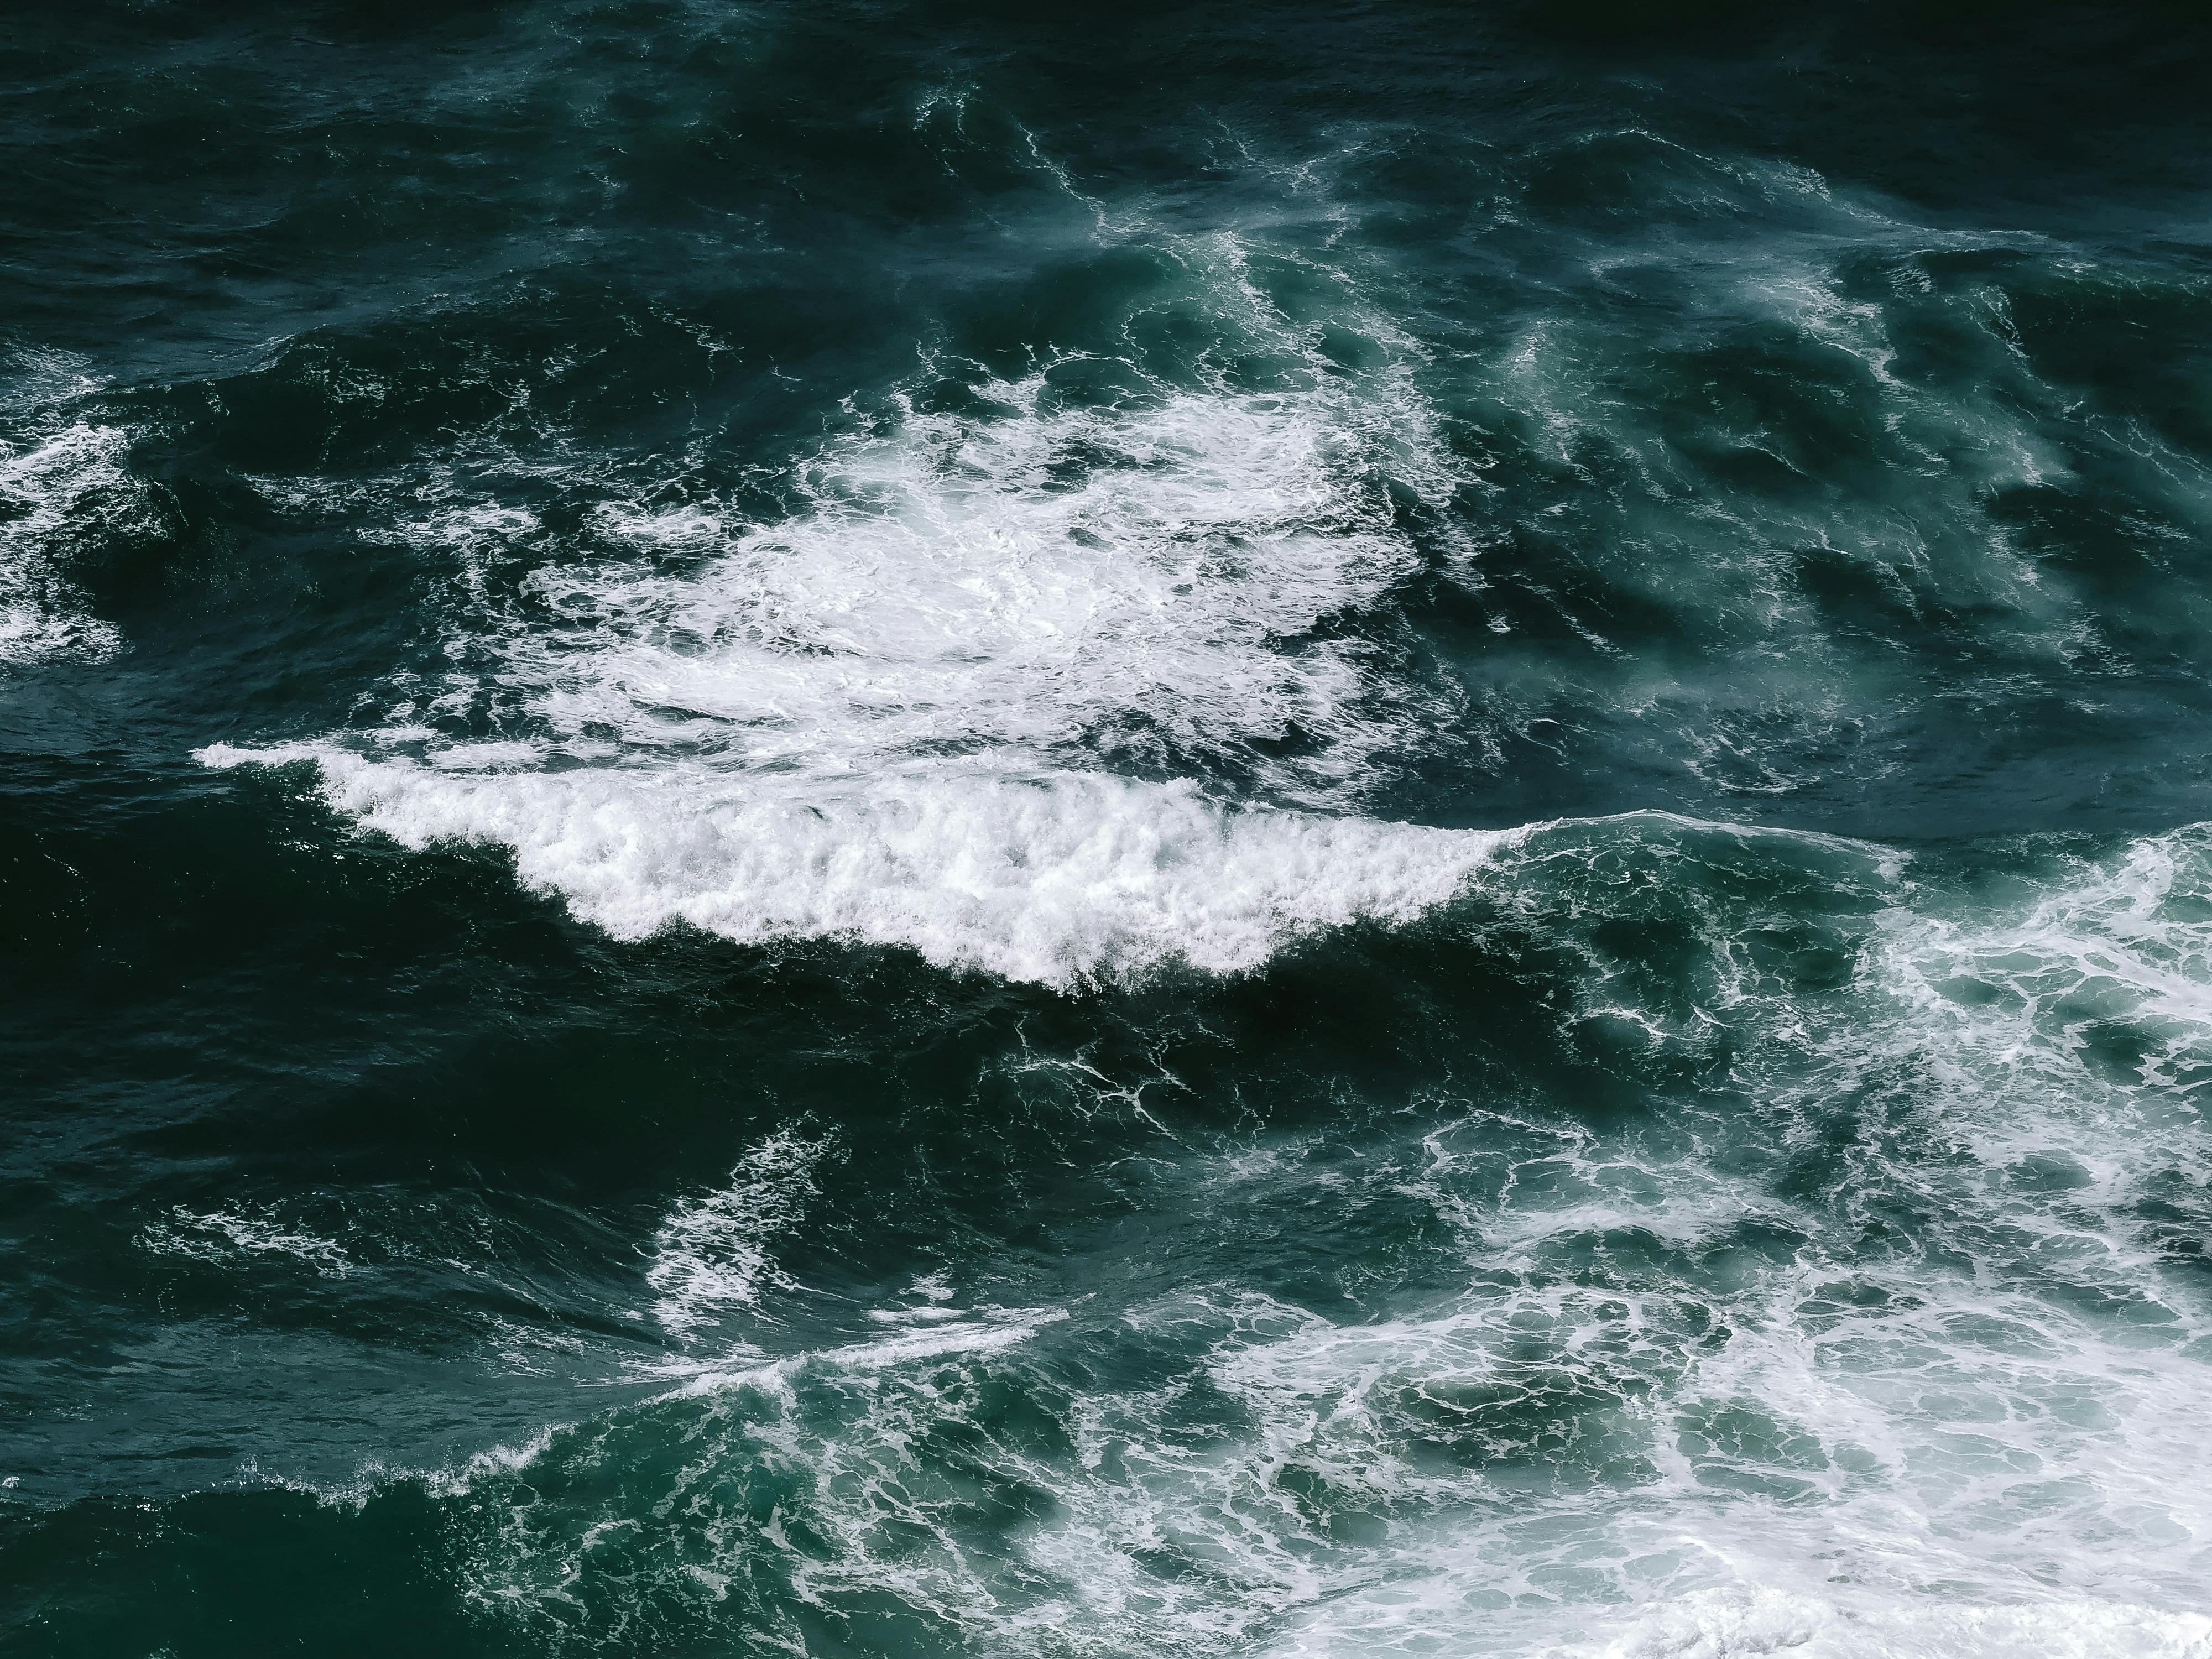 Stormy Sea Ocean Waves with Foam Whiteca, Stock Video